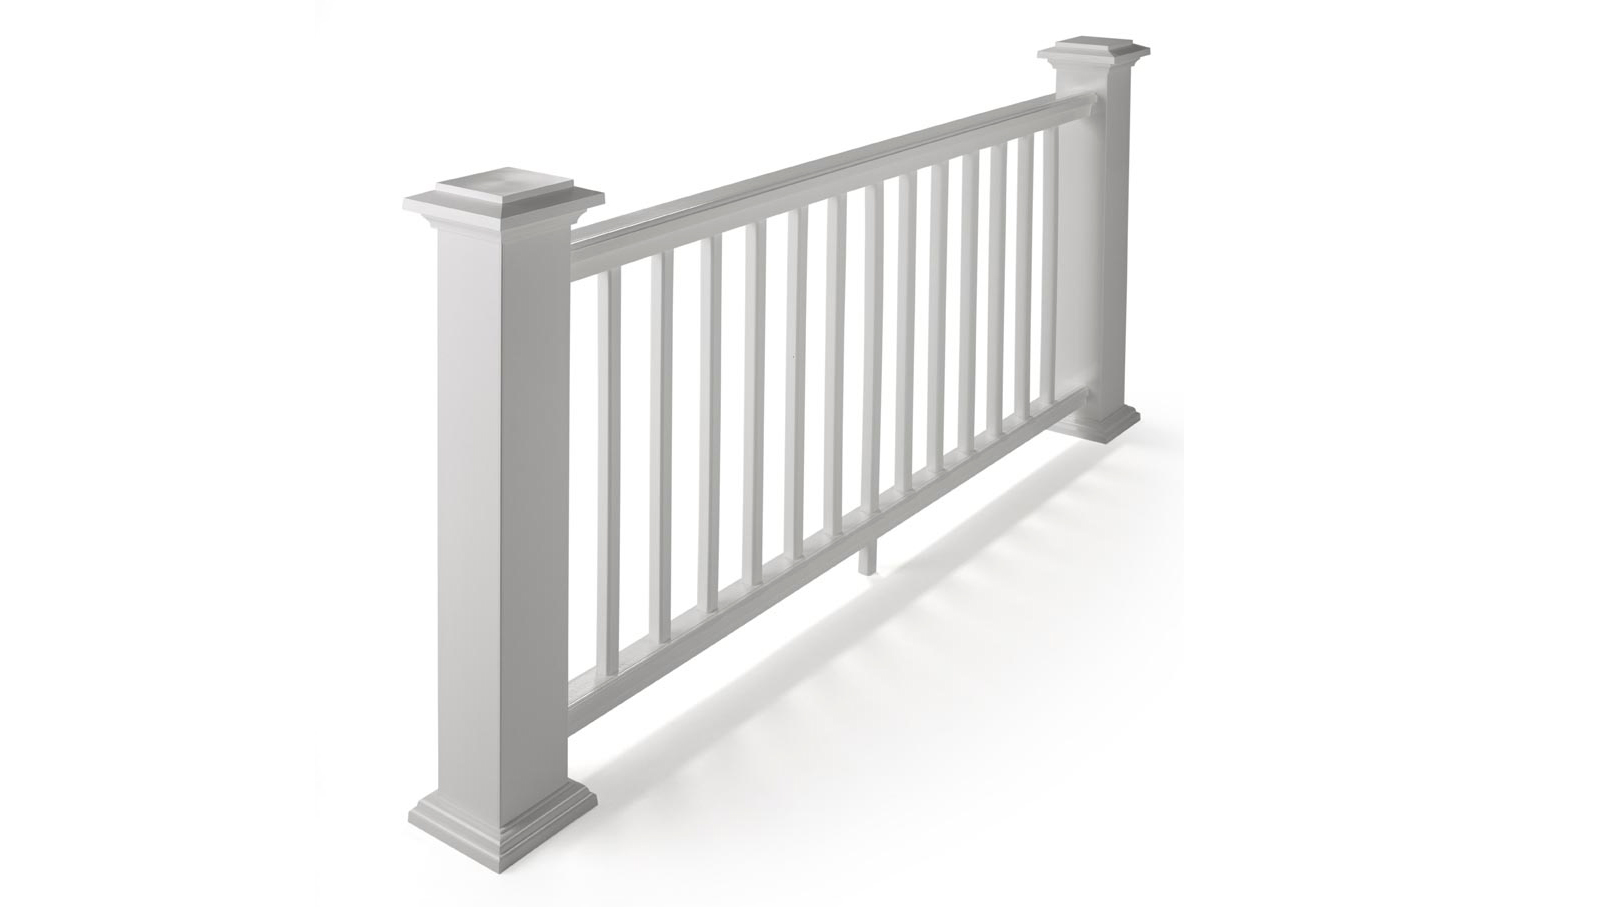 A traditional white porch railing using TimberTech's Premier Rail